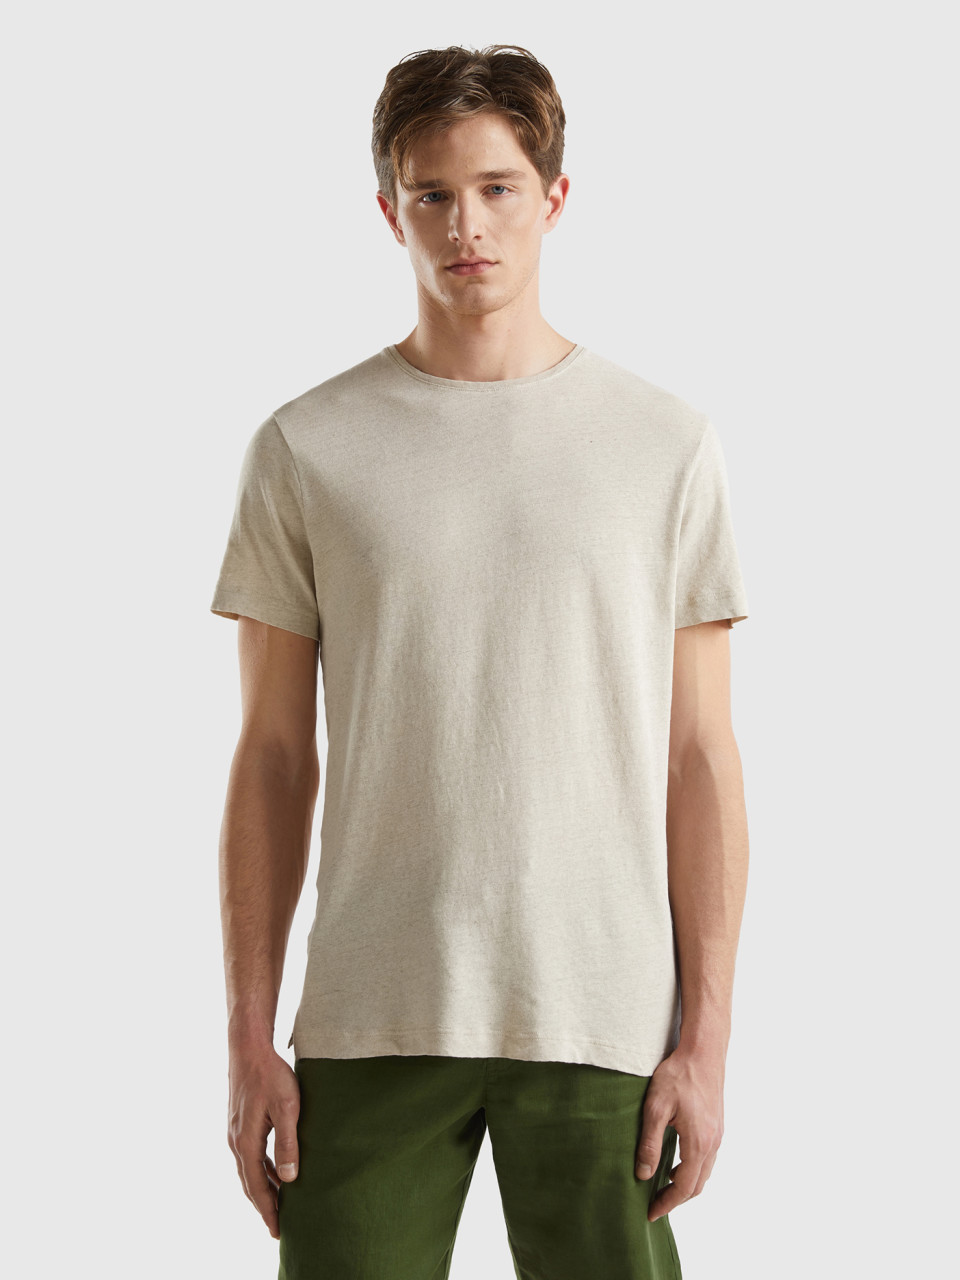 Benetton, T-shirt In Linen Blend, Creamy White, Men